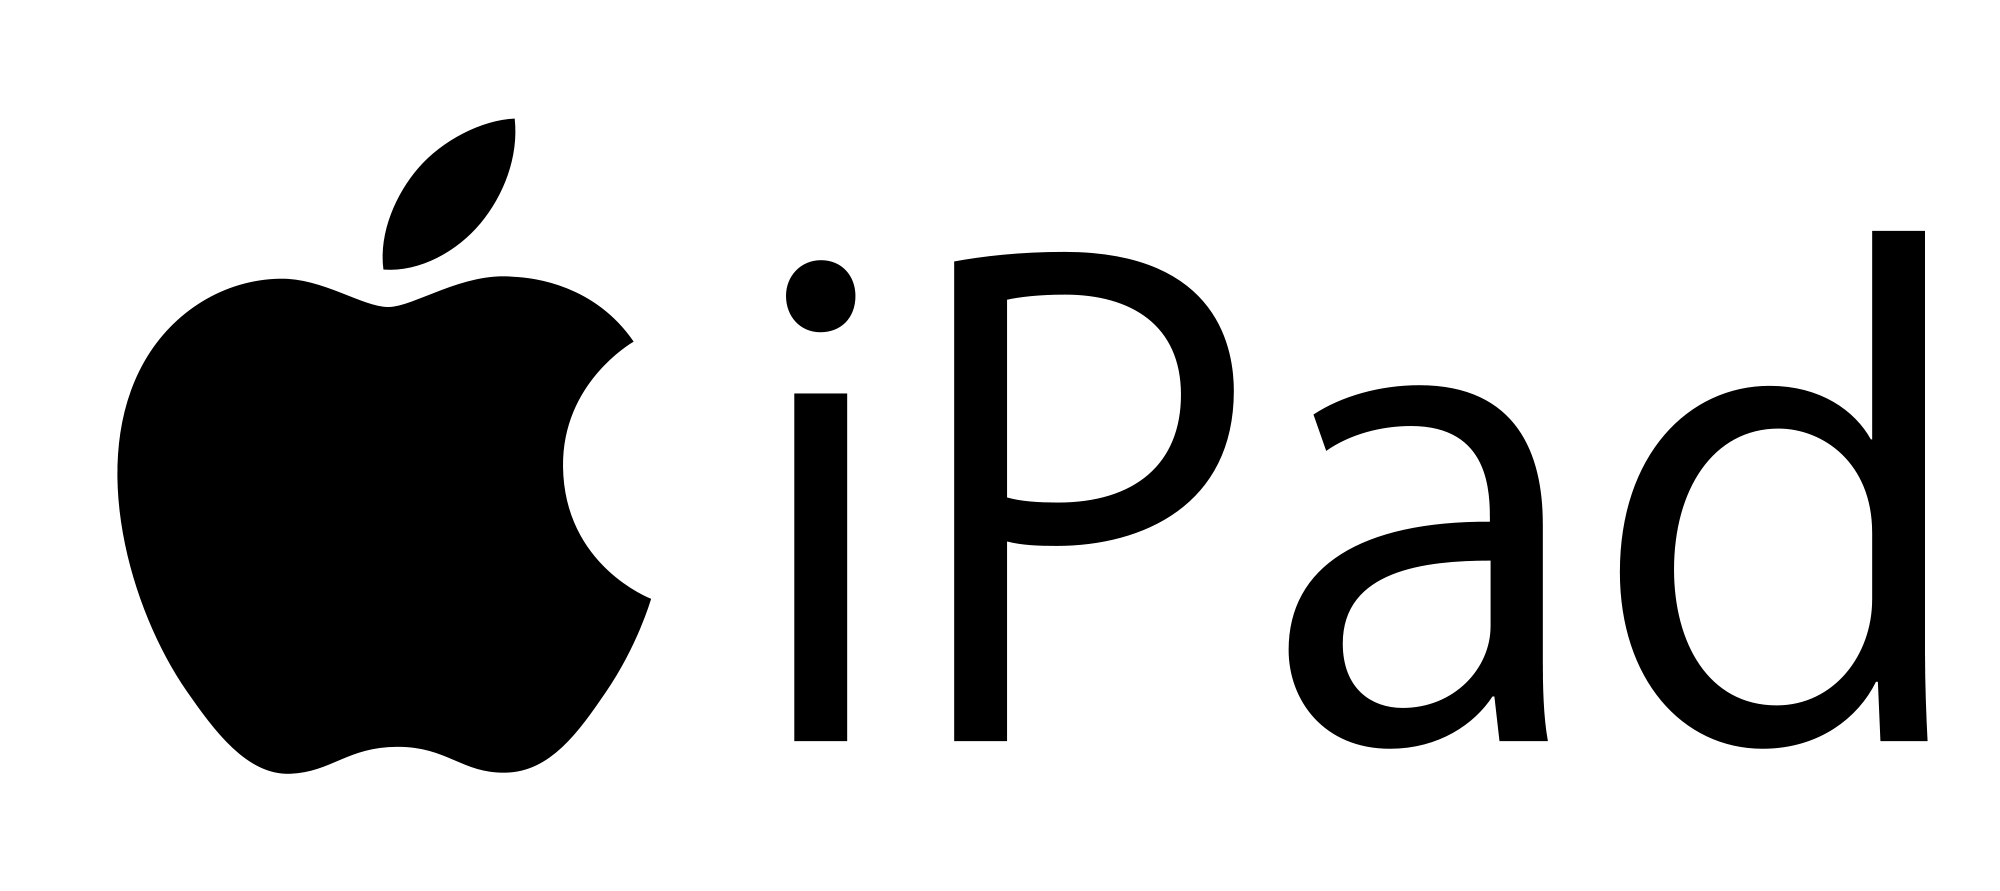 iPad Logo - iPad Logo, iPad Symbol Meaning, History and Evolution